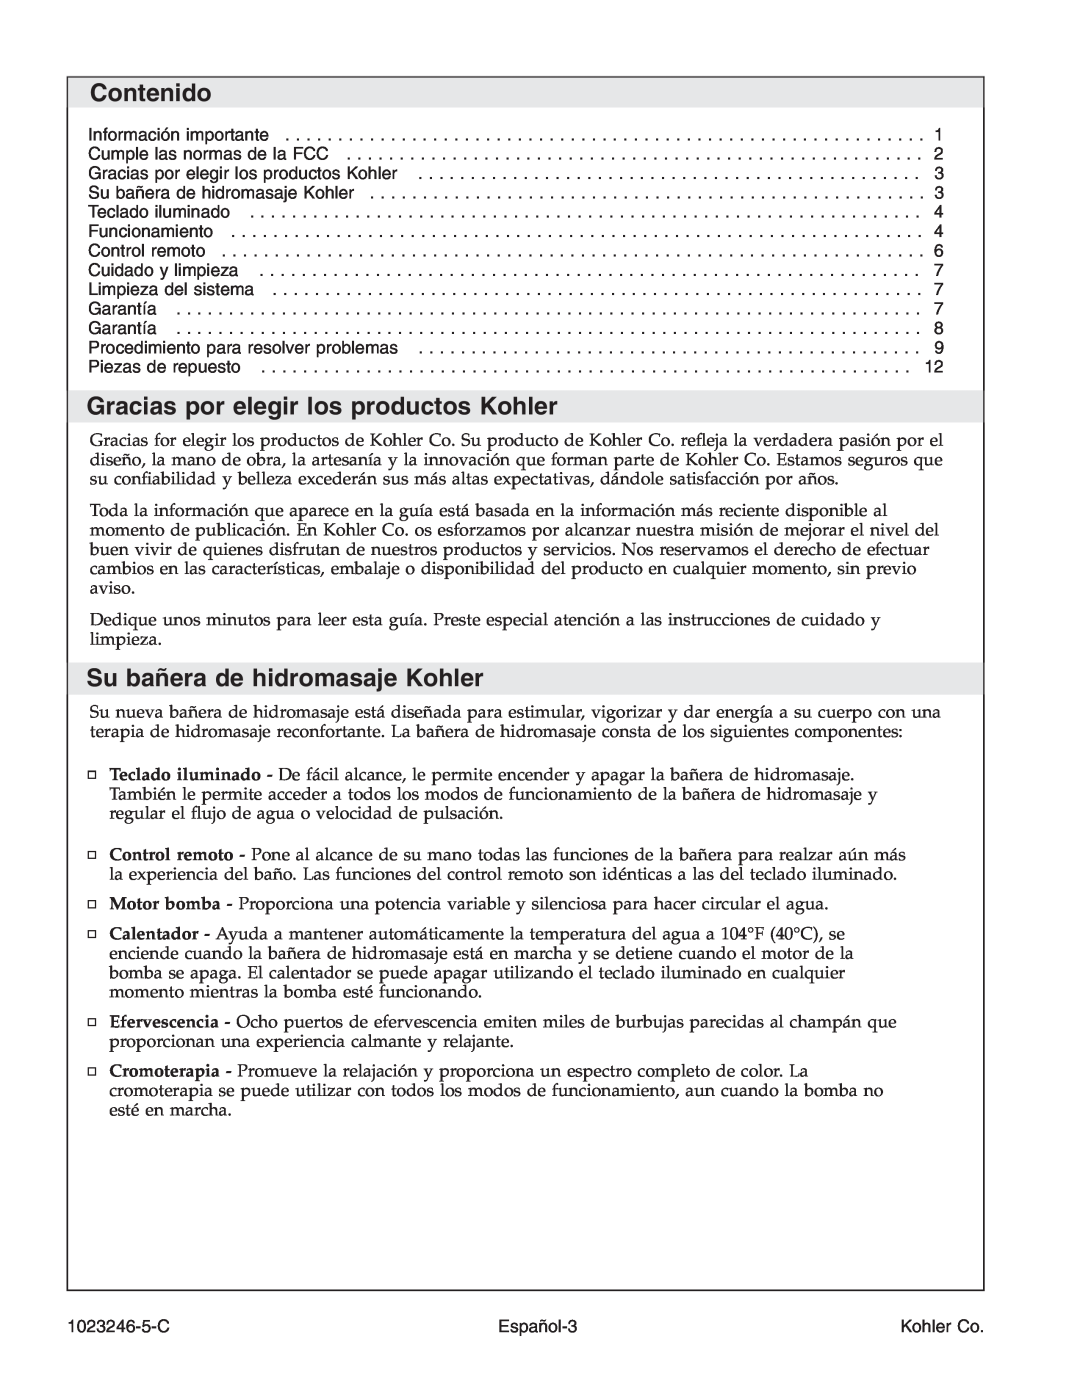 Kohler K-1418-CT manual Contenido, Gracias por elegir los productos Kohler, Su bañera de hidromasaje Kohler 